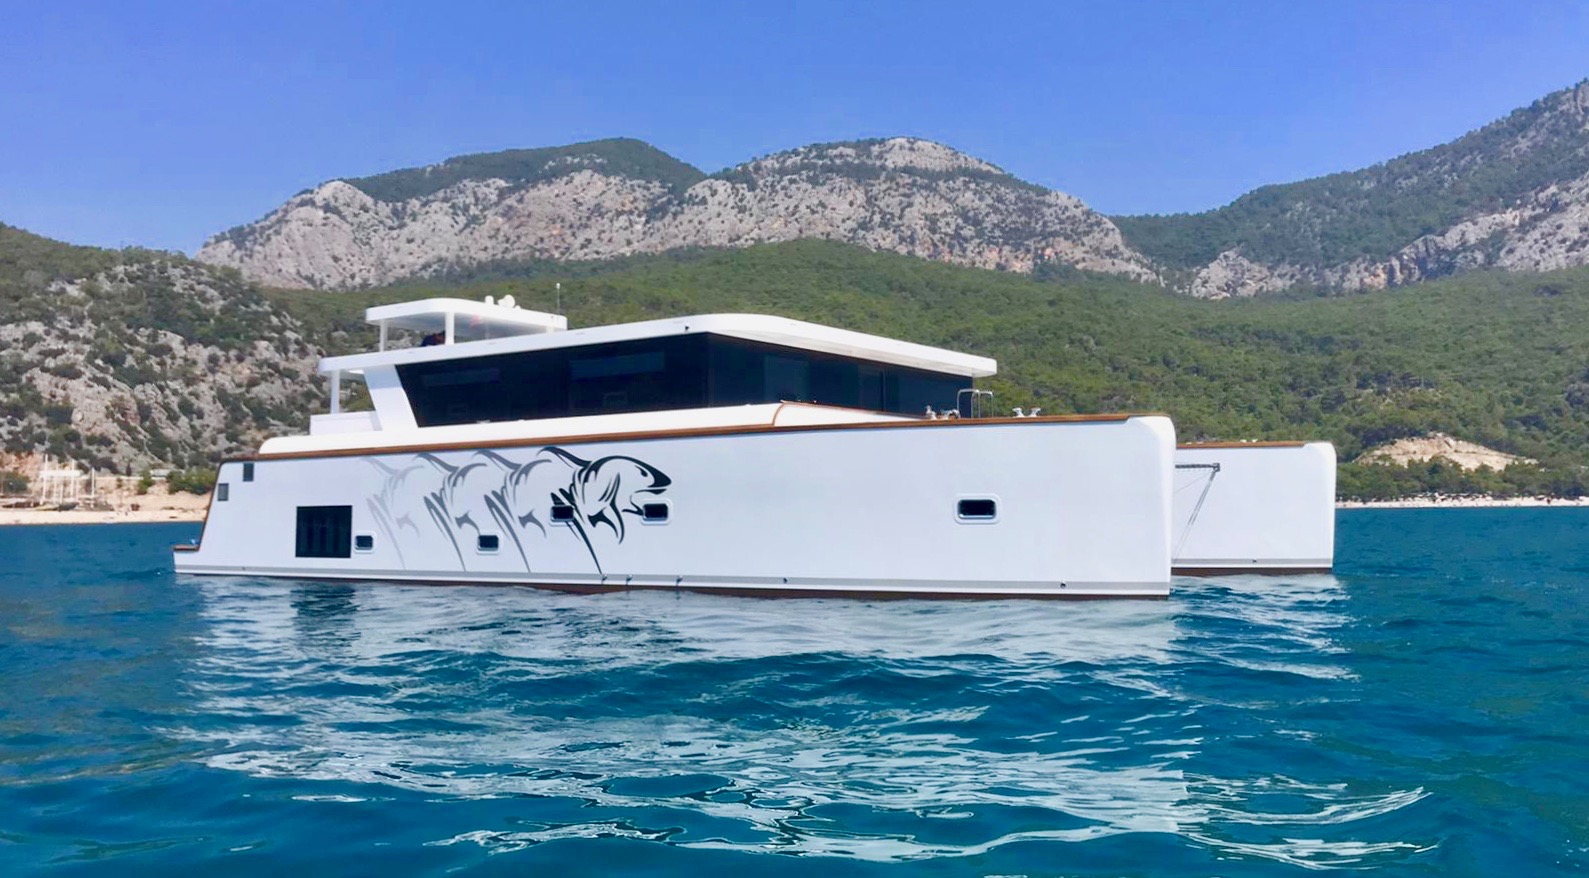 Catamaran FOR CHARTER, year 2020 brand Ocean Beast and model 65, available in Port dAndratx Andratx Mallorca España